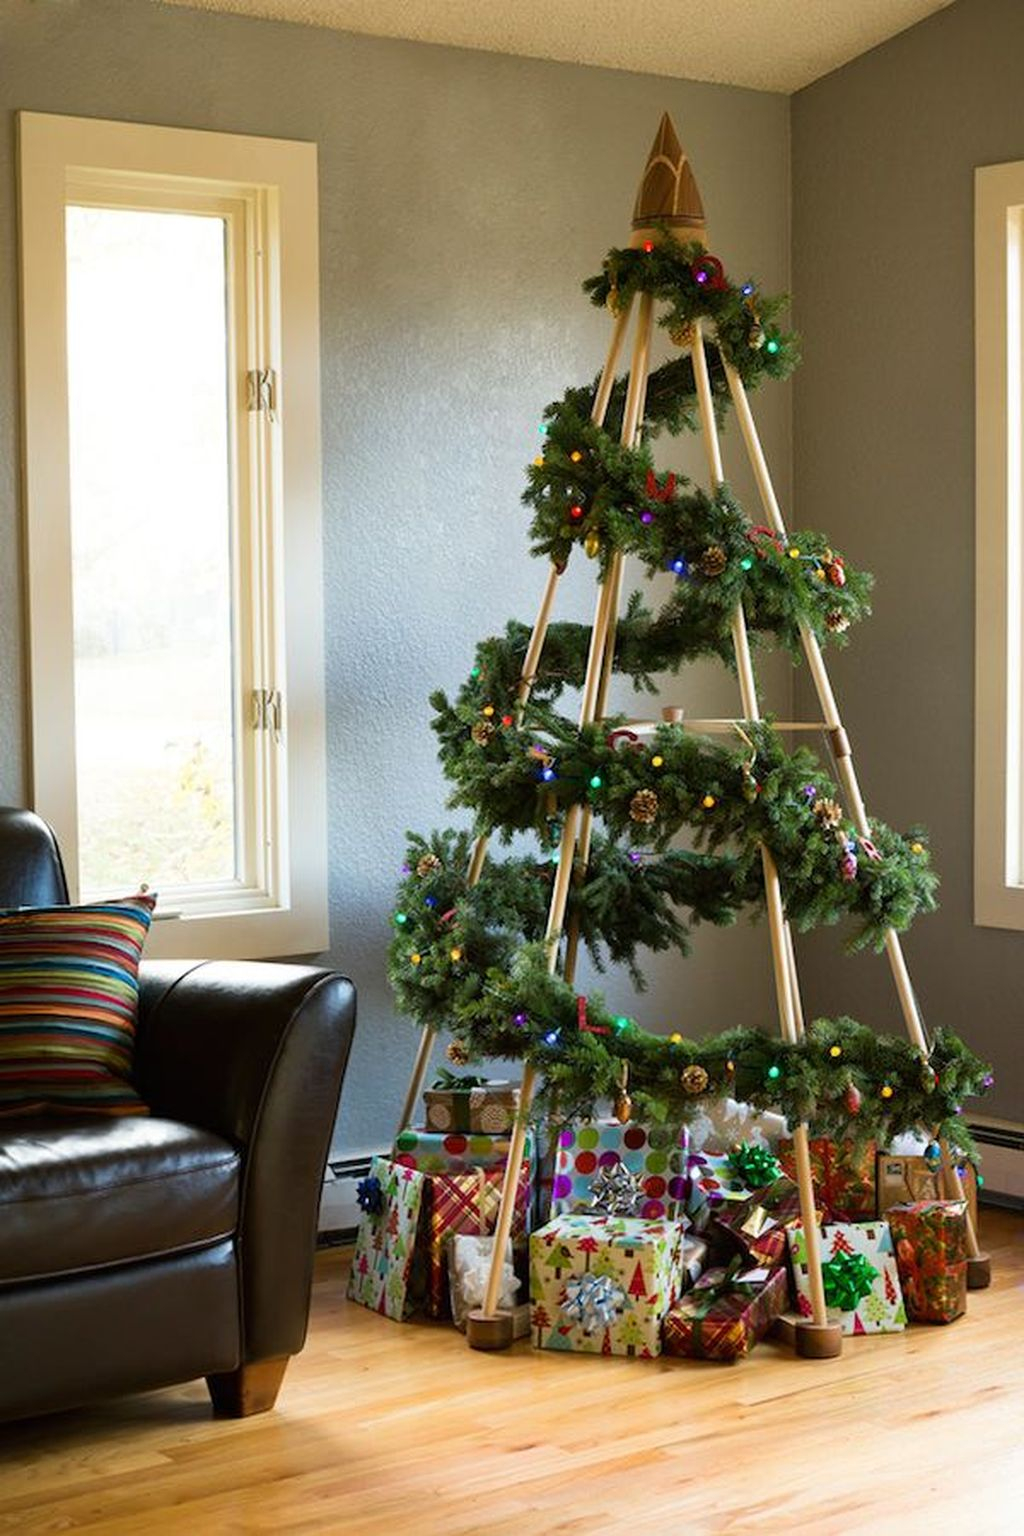 Amazing Diy Christmas Tree Ideas19